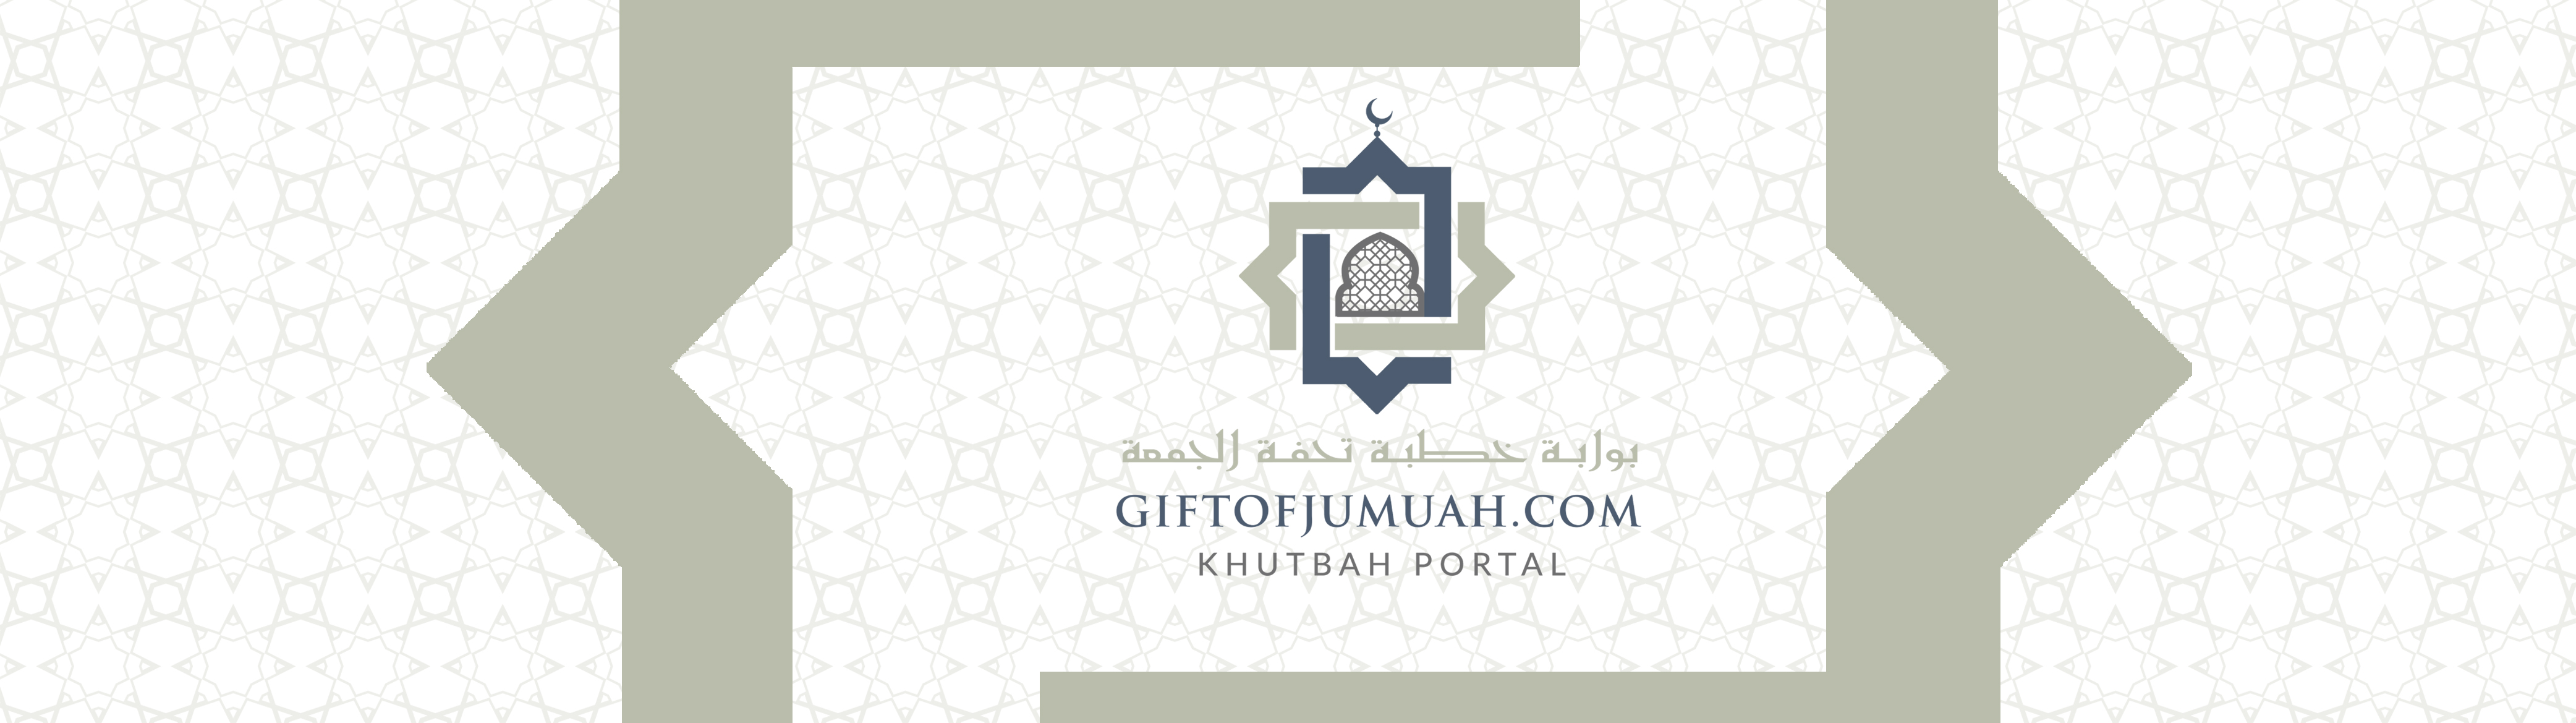 Gift of Jumuah